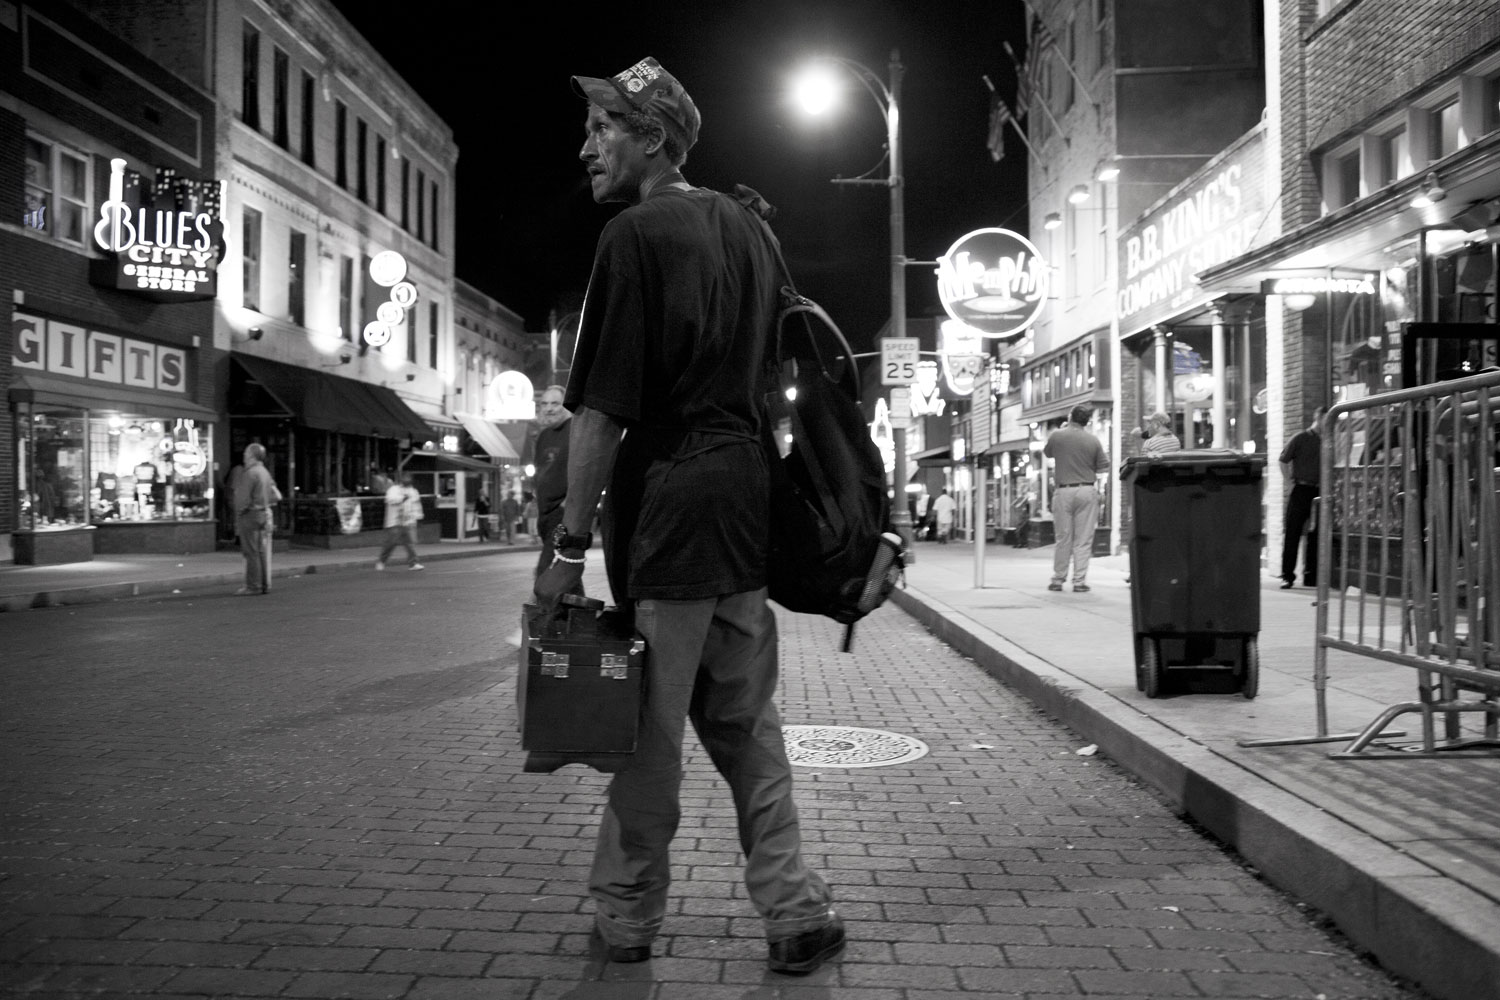 Shoe shine man looking for business along Beale Street in Memphis, Tenn.